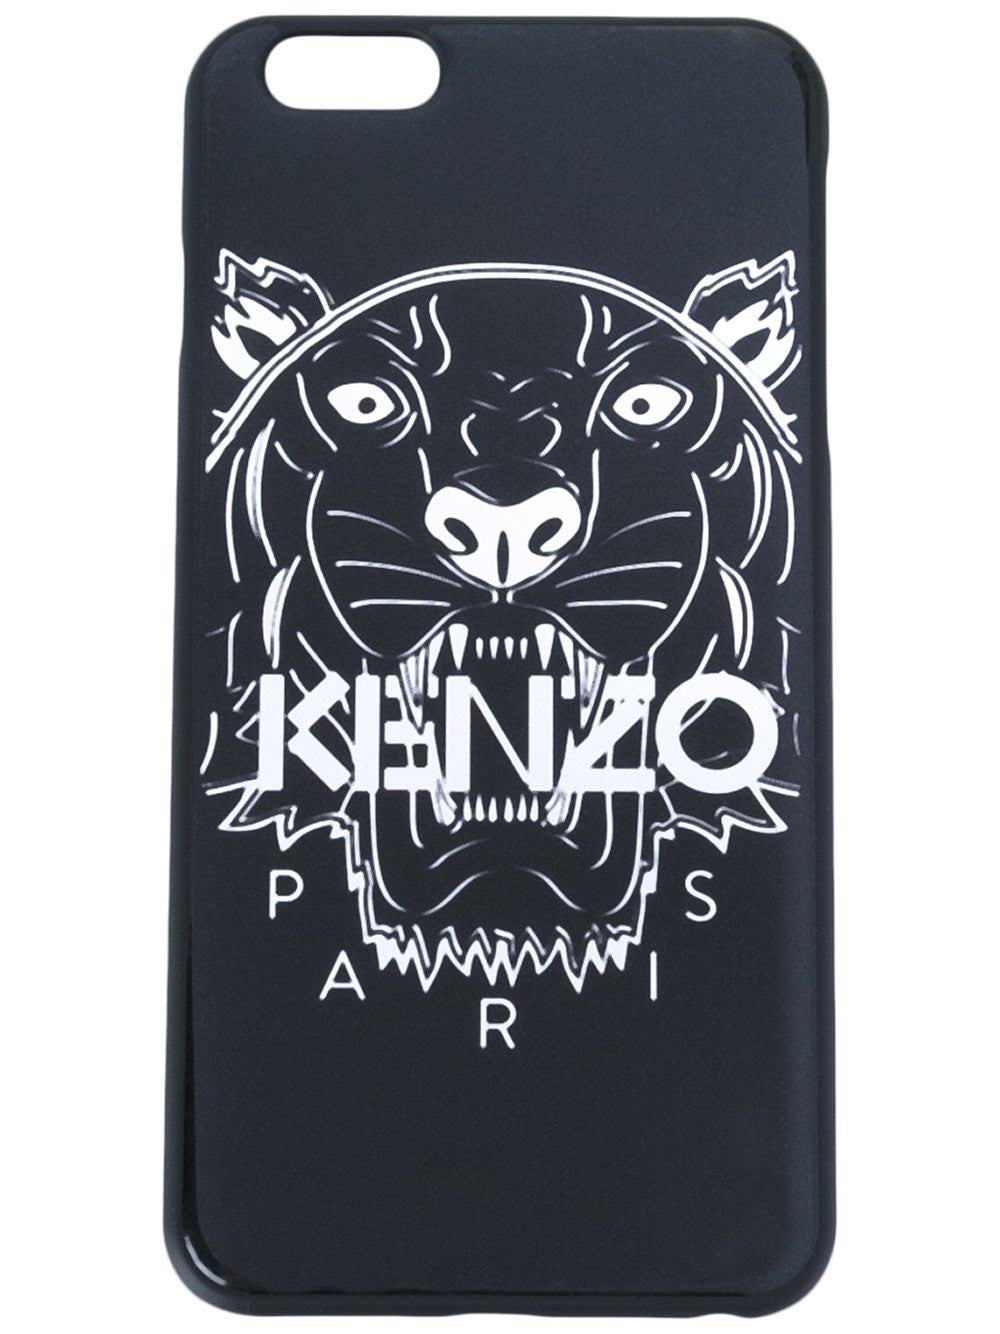 coque iphone 6 plus kenzo